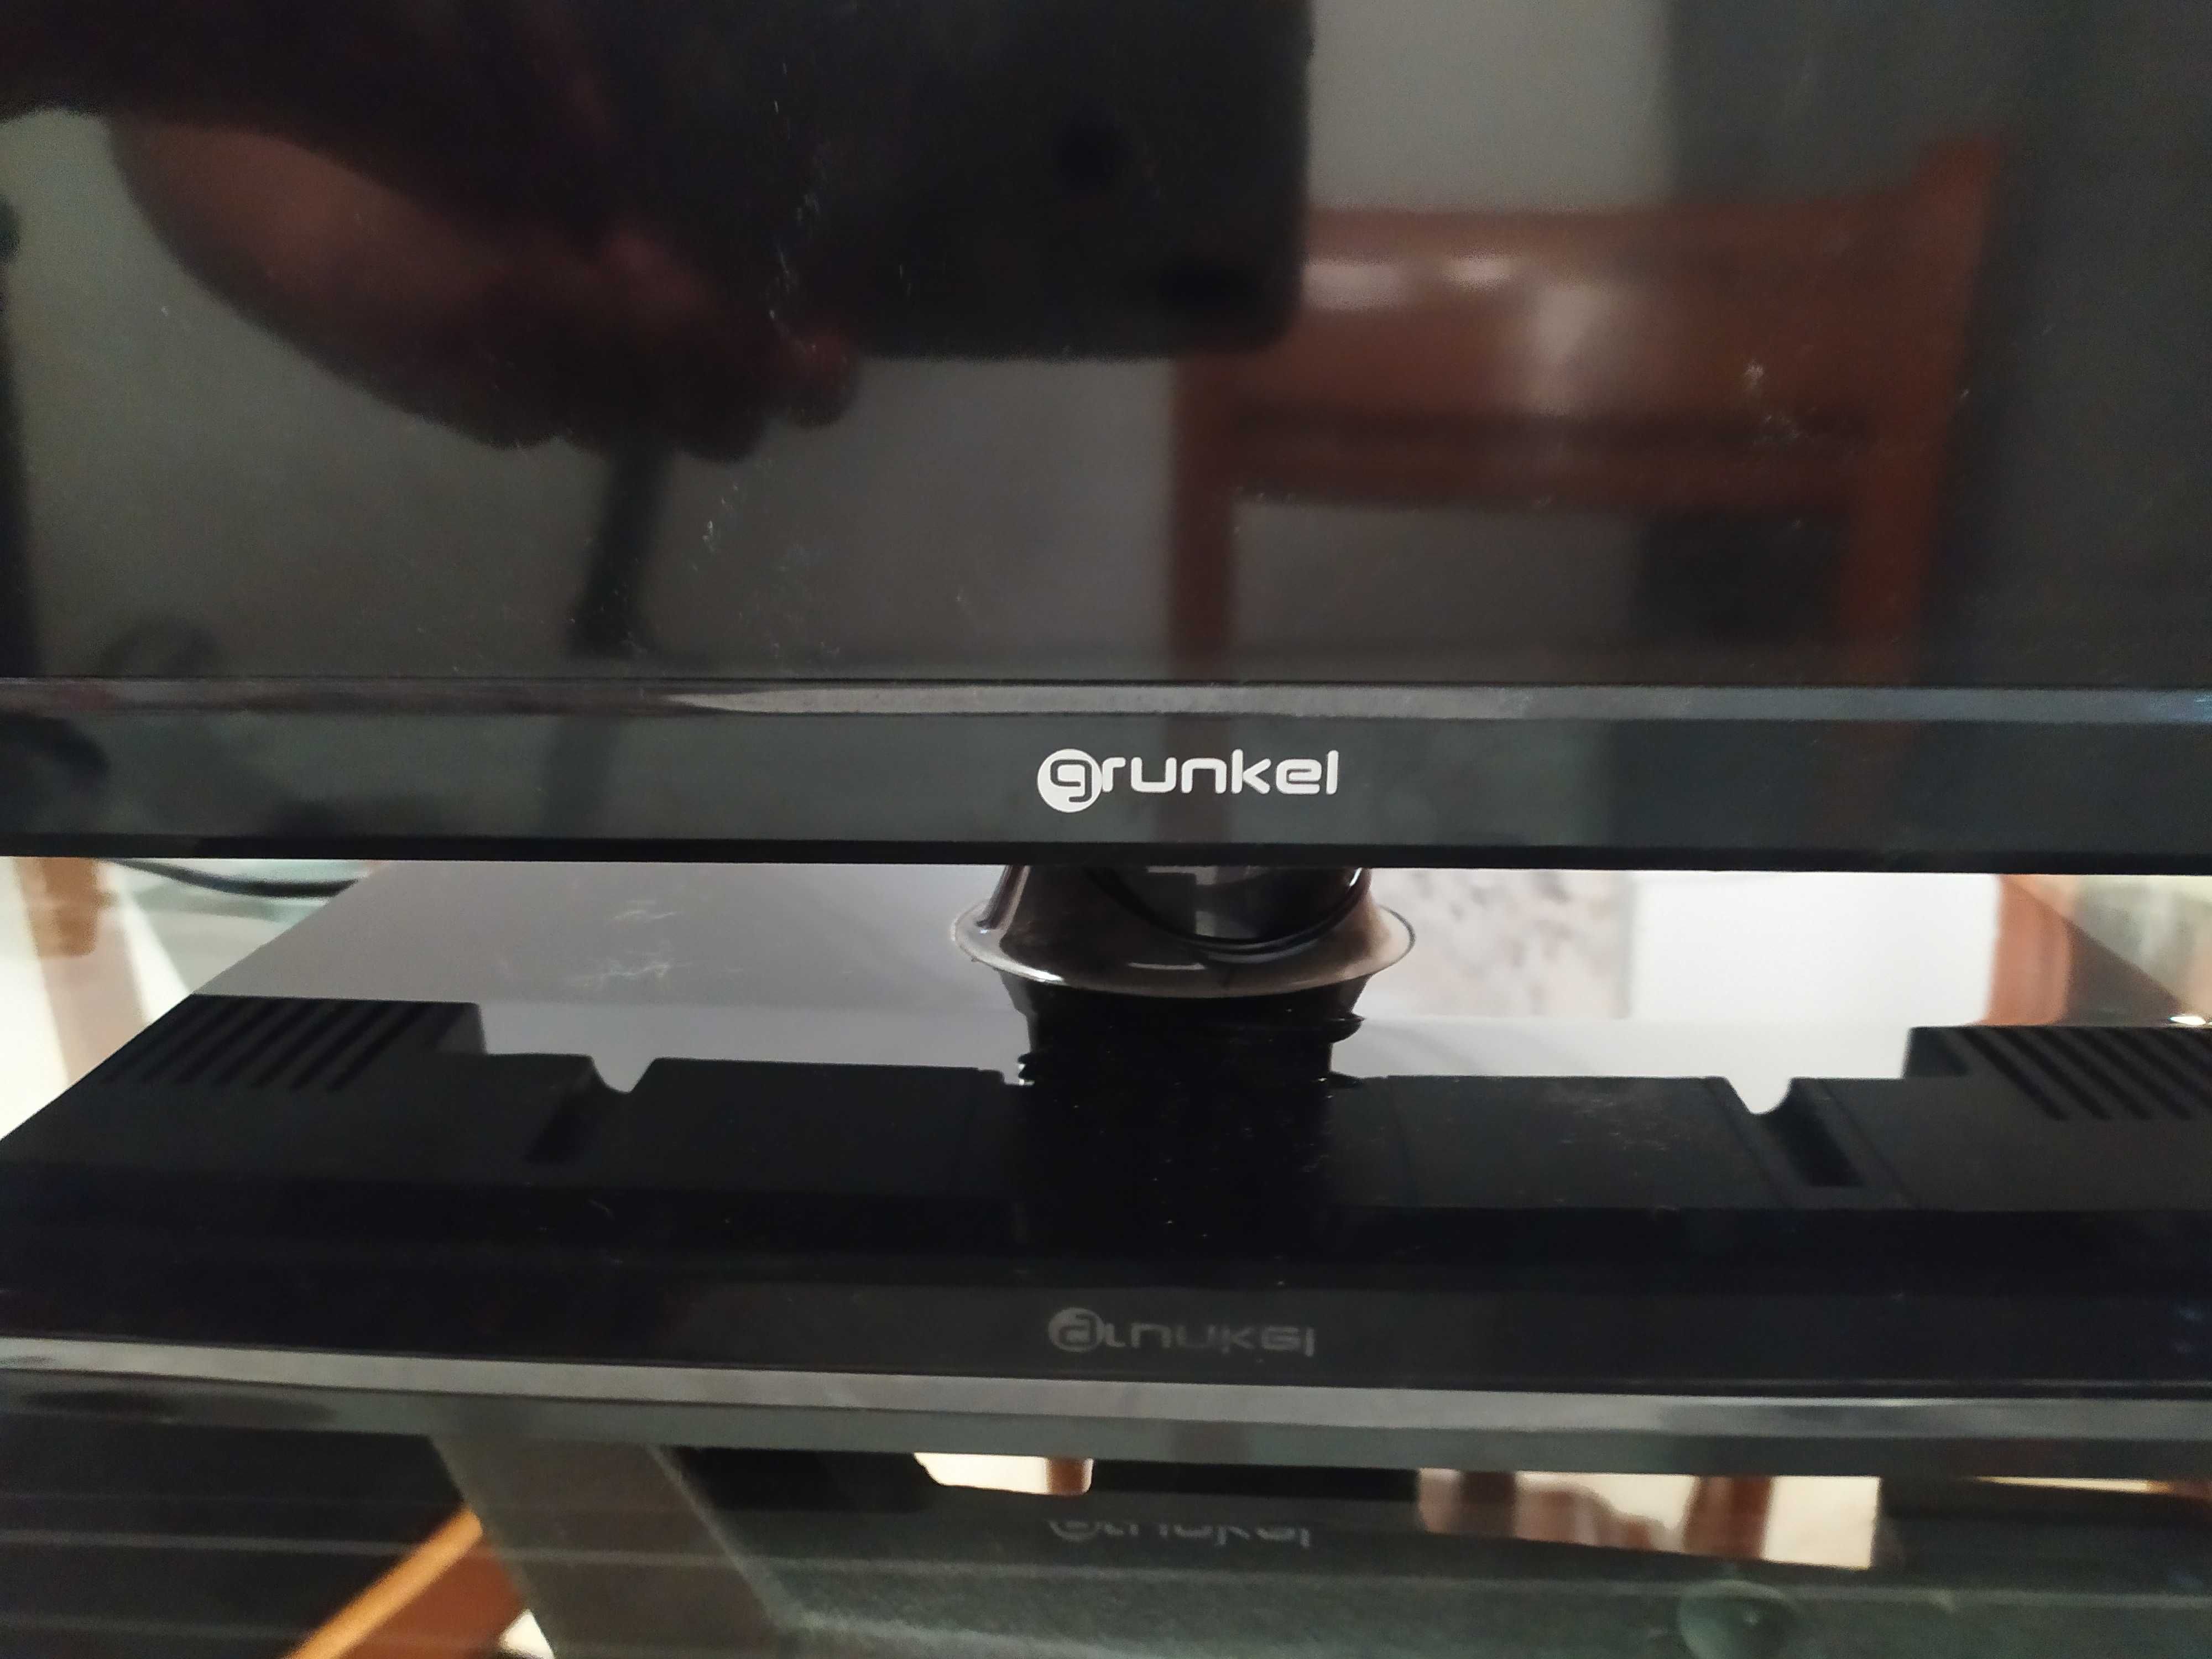 TV LED marca Grunkel 24' com 2 anos